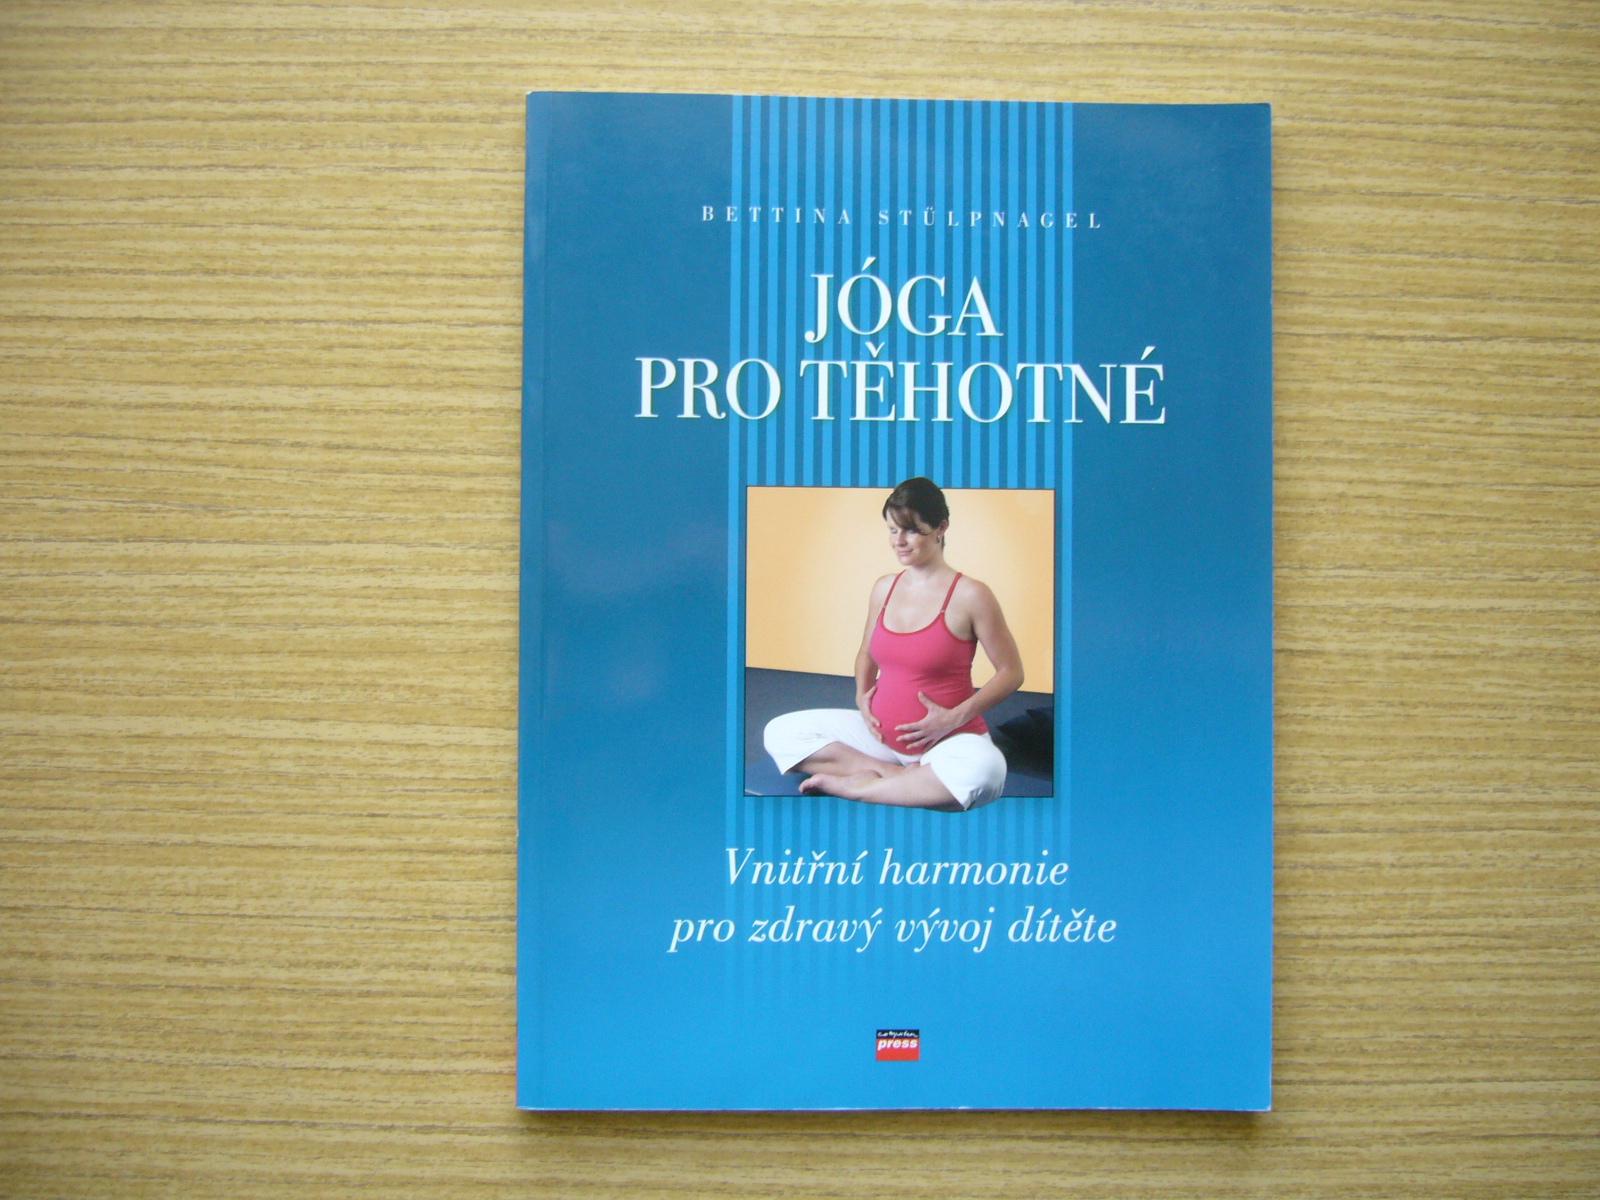 Bettina Stülpnagel - Jóga pre tehotné | 2006 -n - Knihy